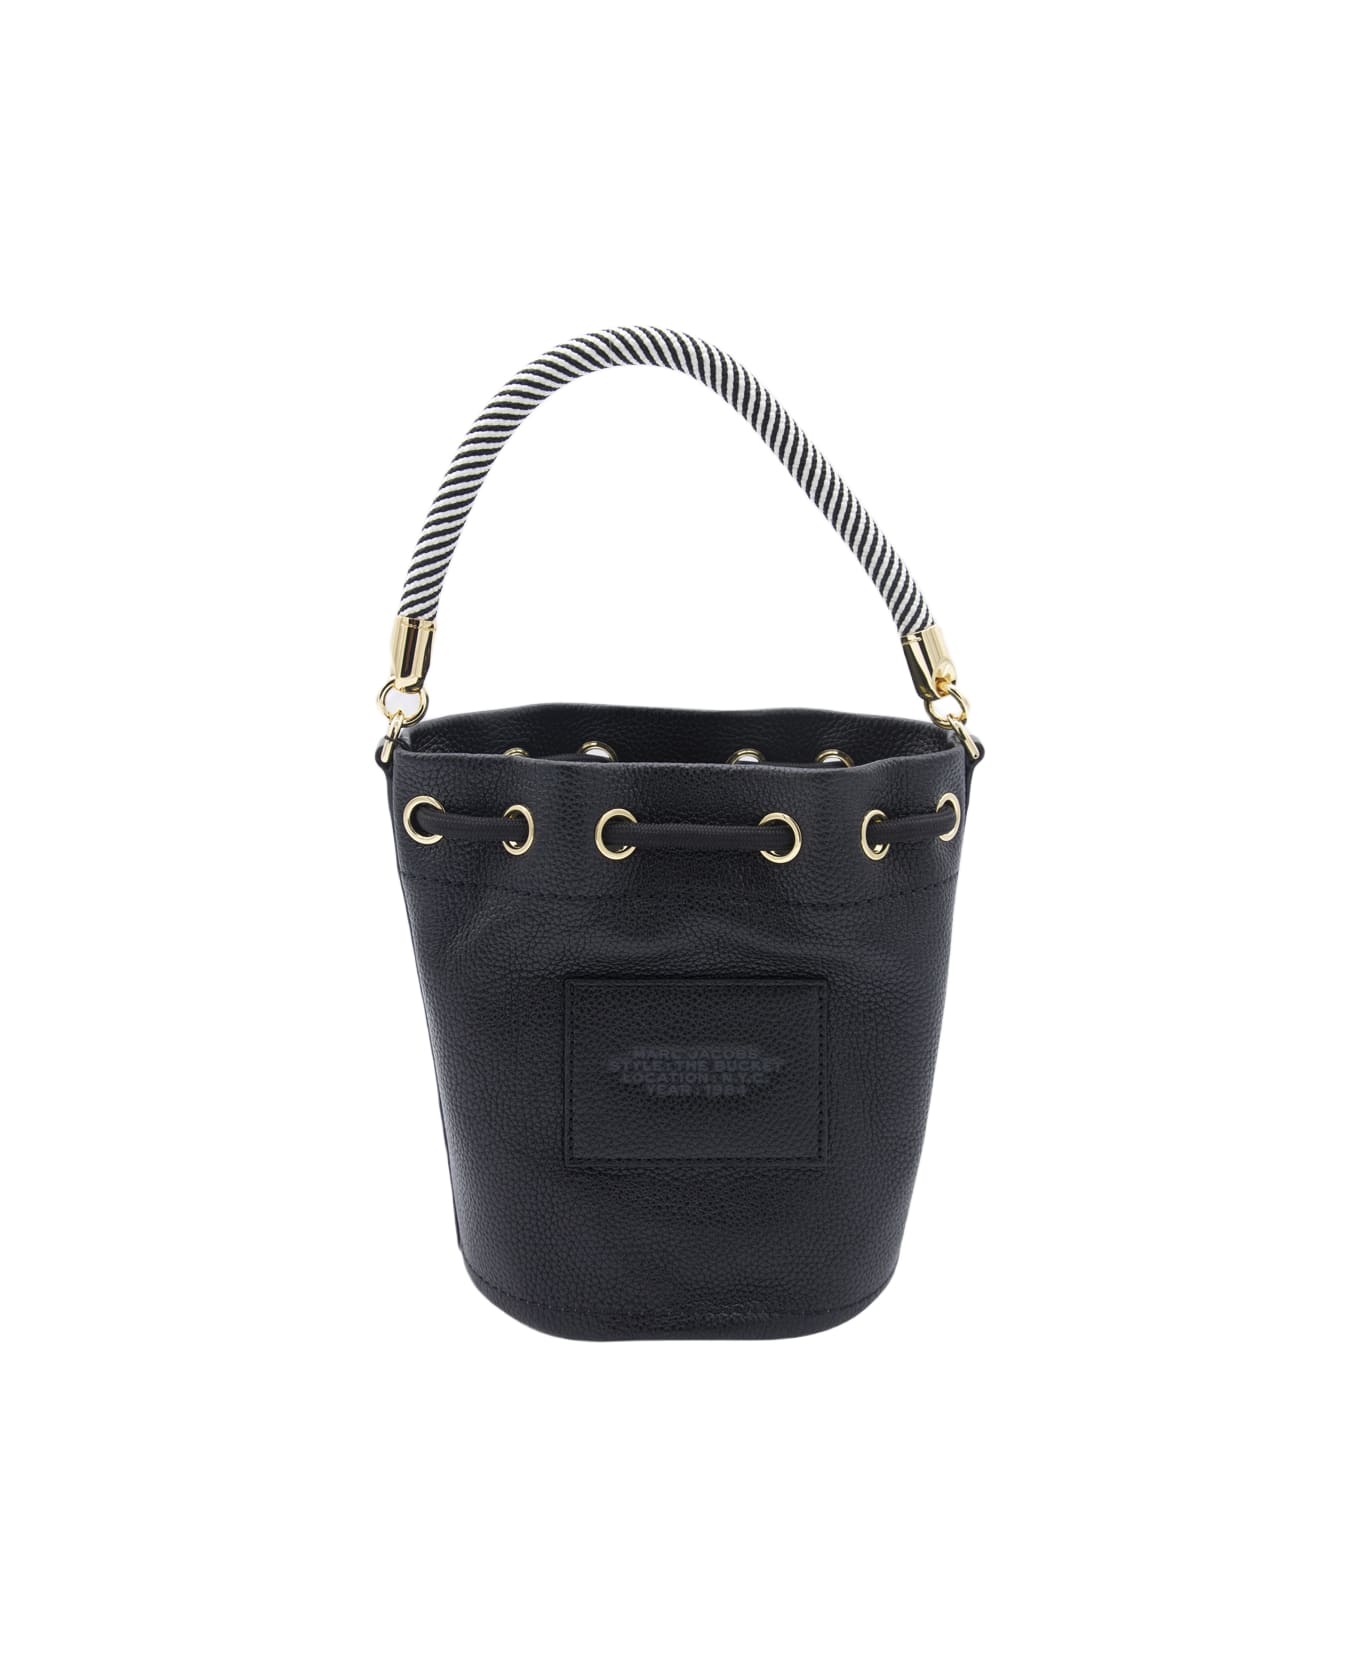 Marc Jacobs Black Leather Bucket Bag - Black